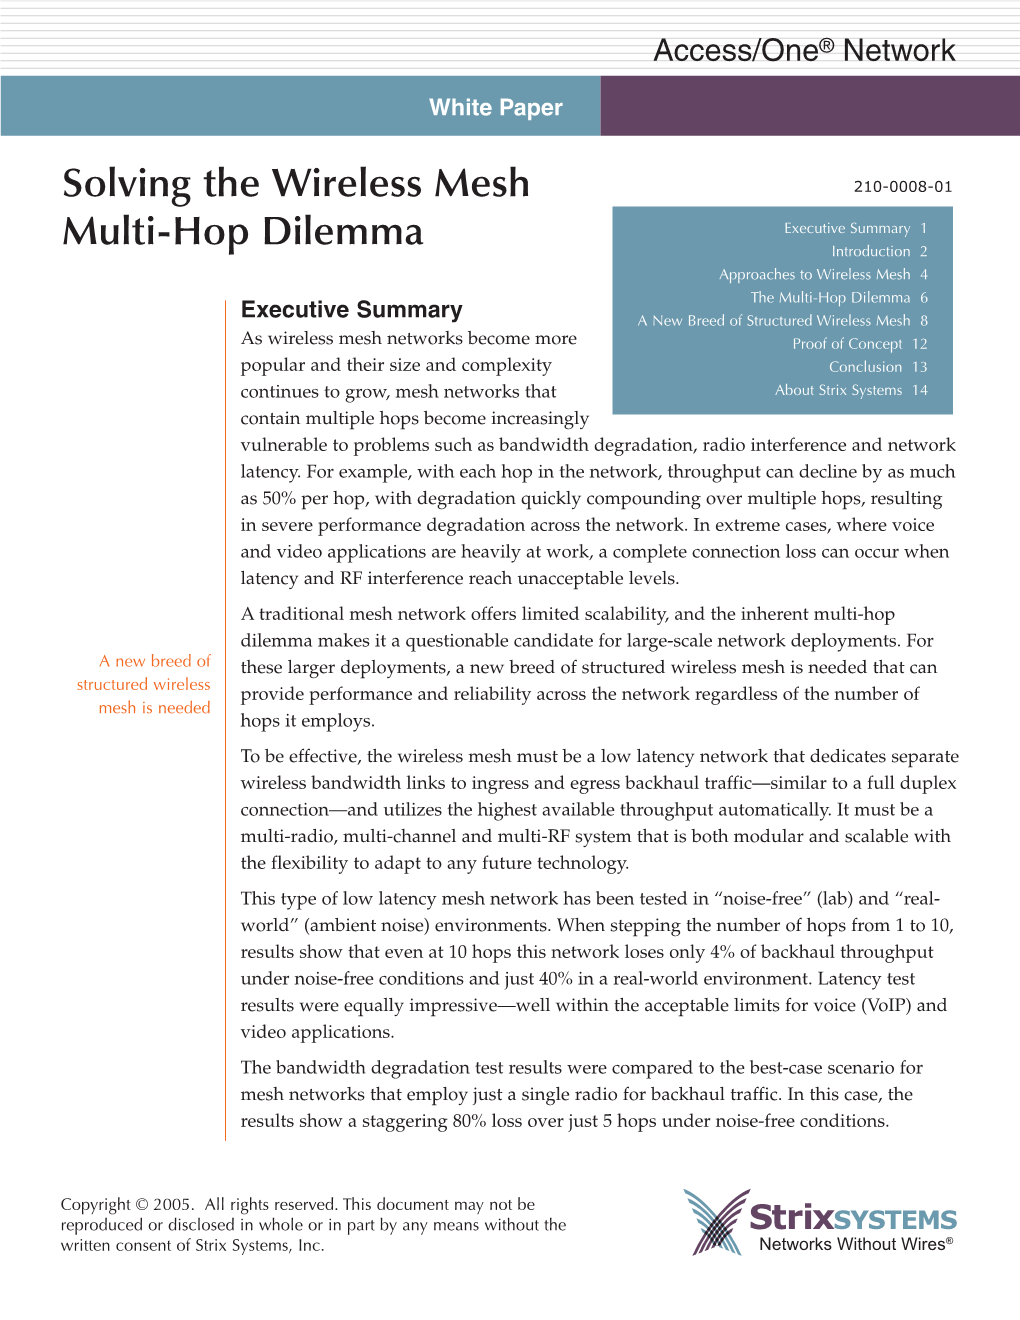 Solving the Wireless Mesh Multi-Hop Dilemma